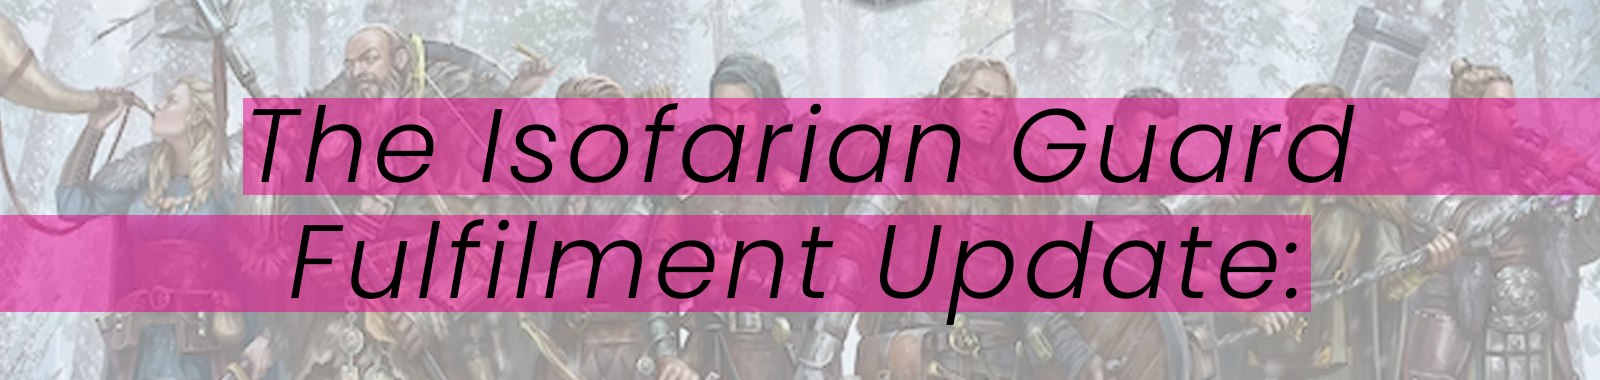 The Isofarian Guard Fulfilment Update: